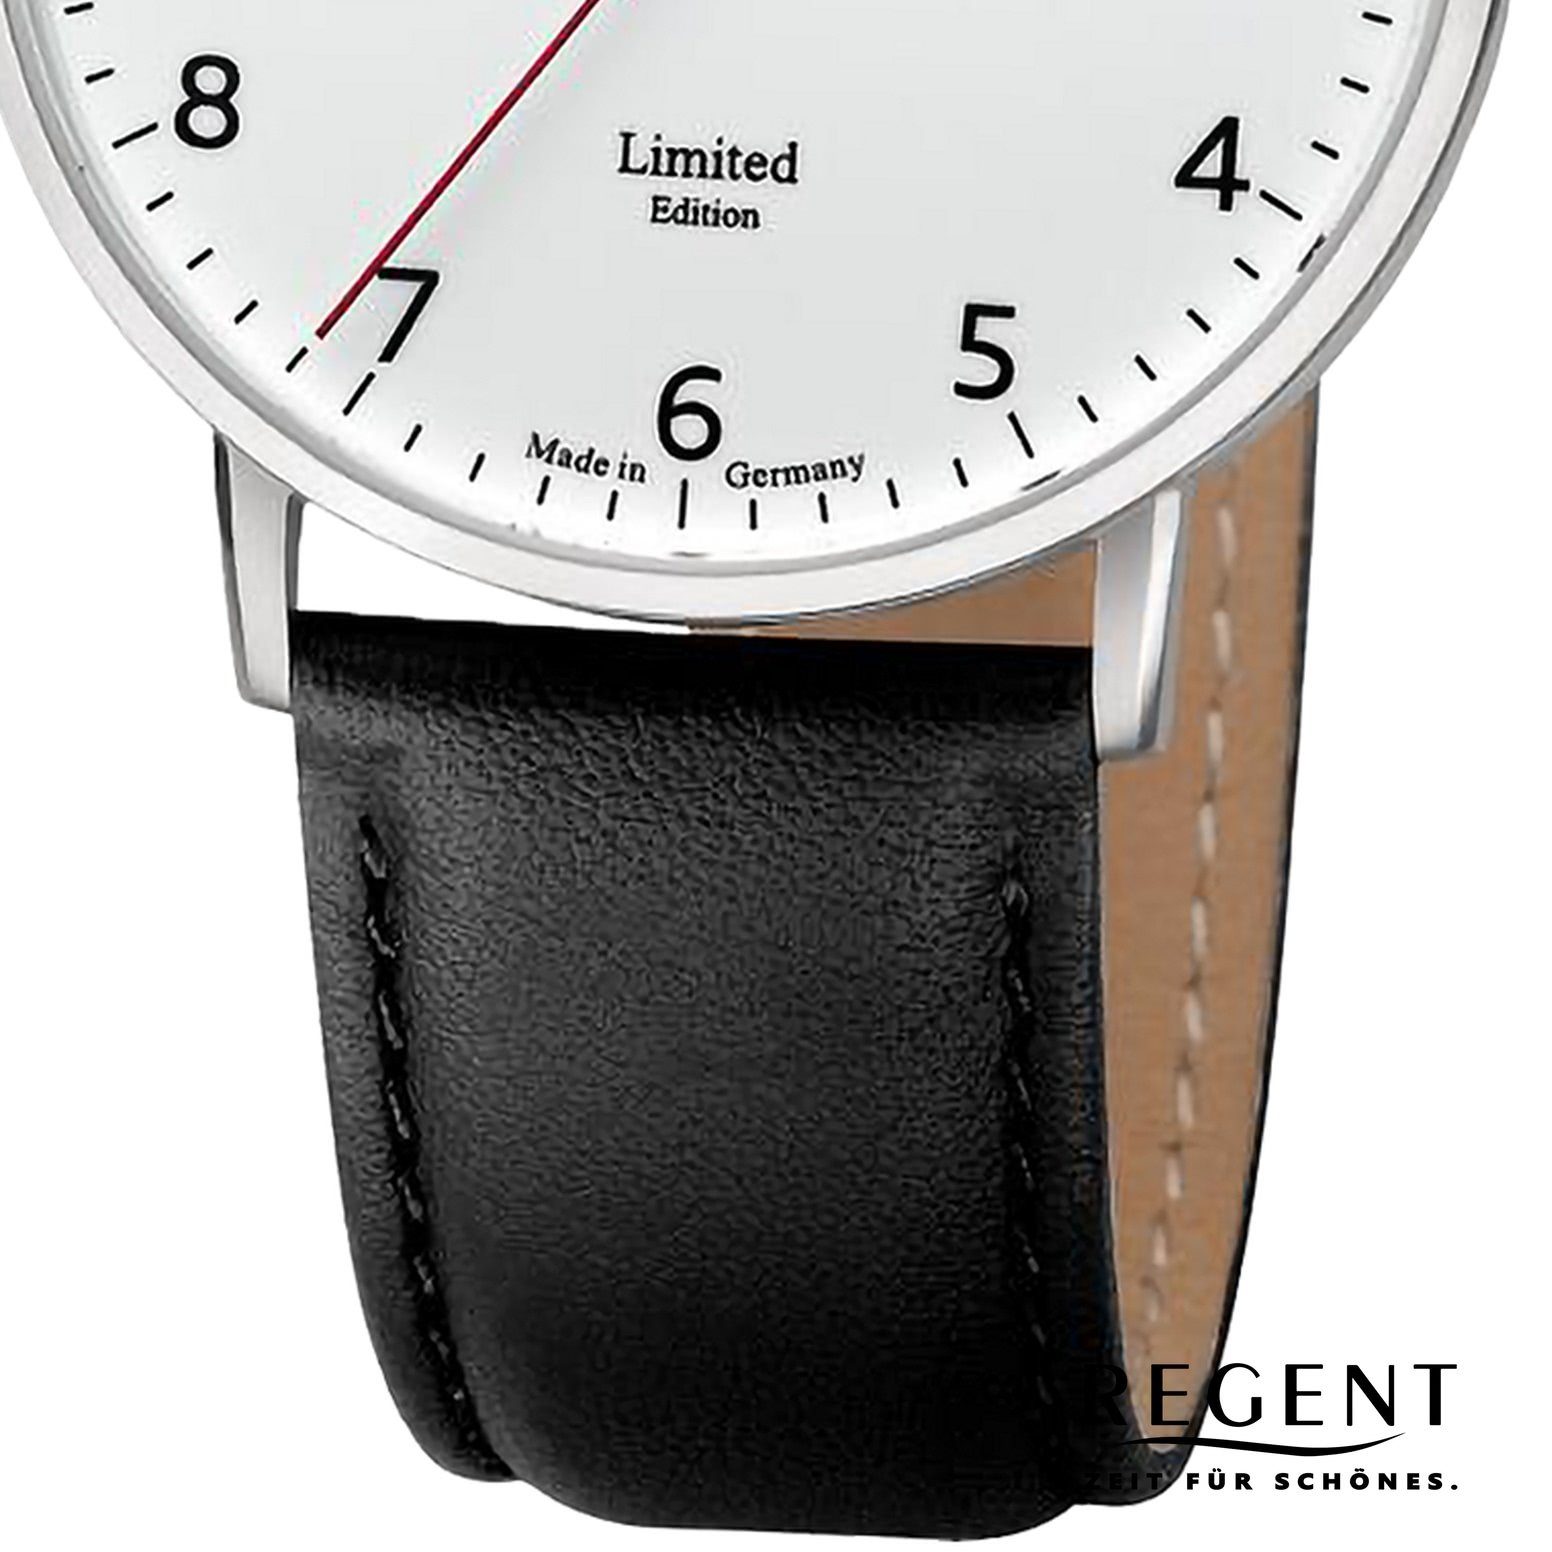 Armbanduhr Herren Regent Regent Herren Lederarmband Armbanduhr rund, extra 39mm), Analog, groß (ca. Quarzuhr